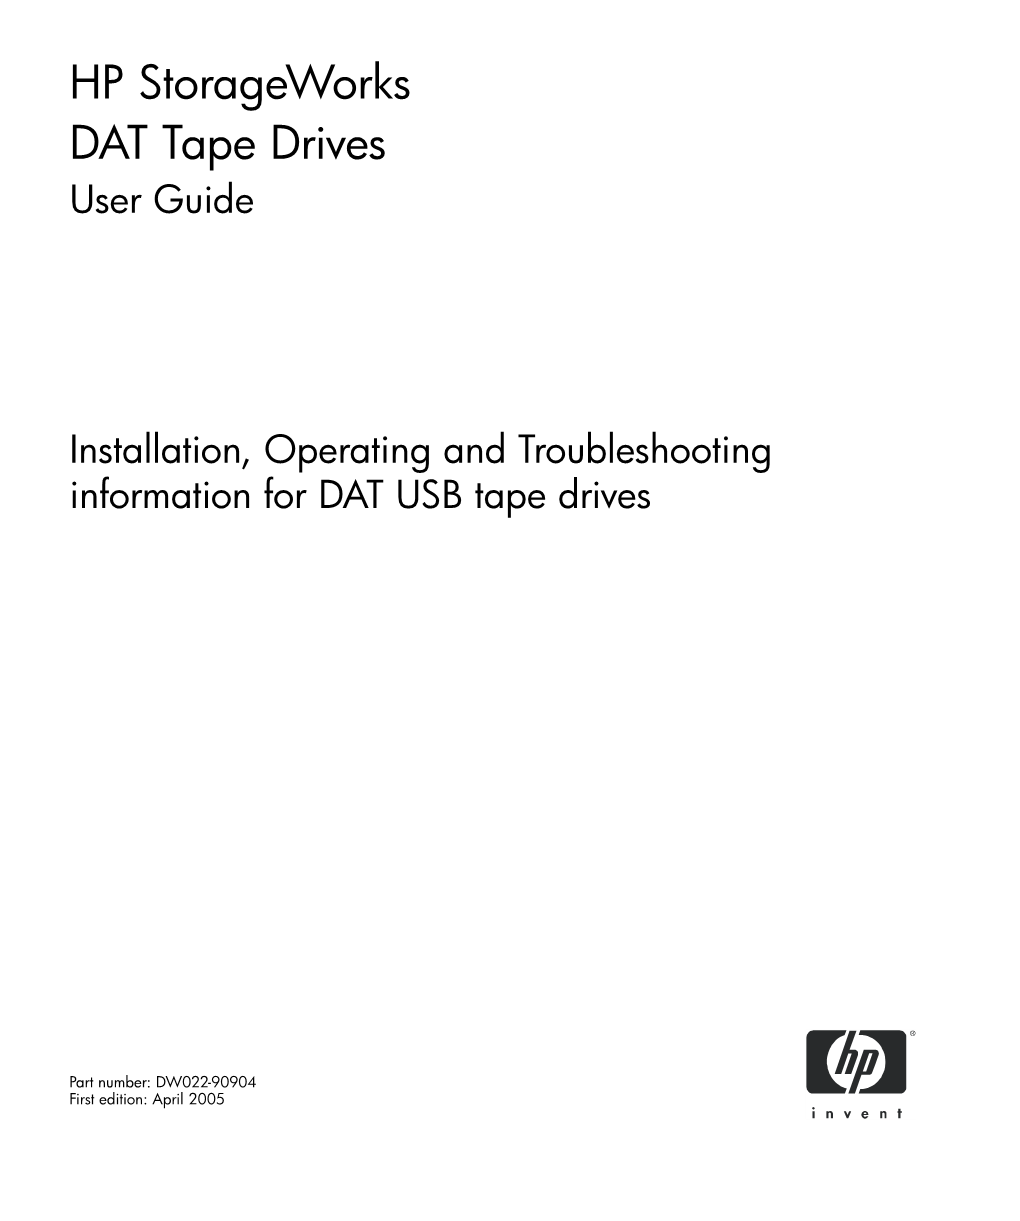 DAT USB Tape Drives User Guide April 2005